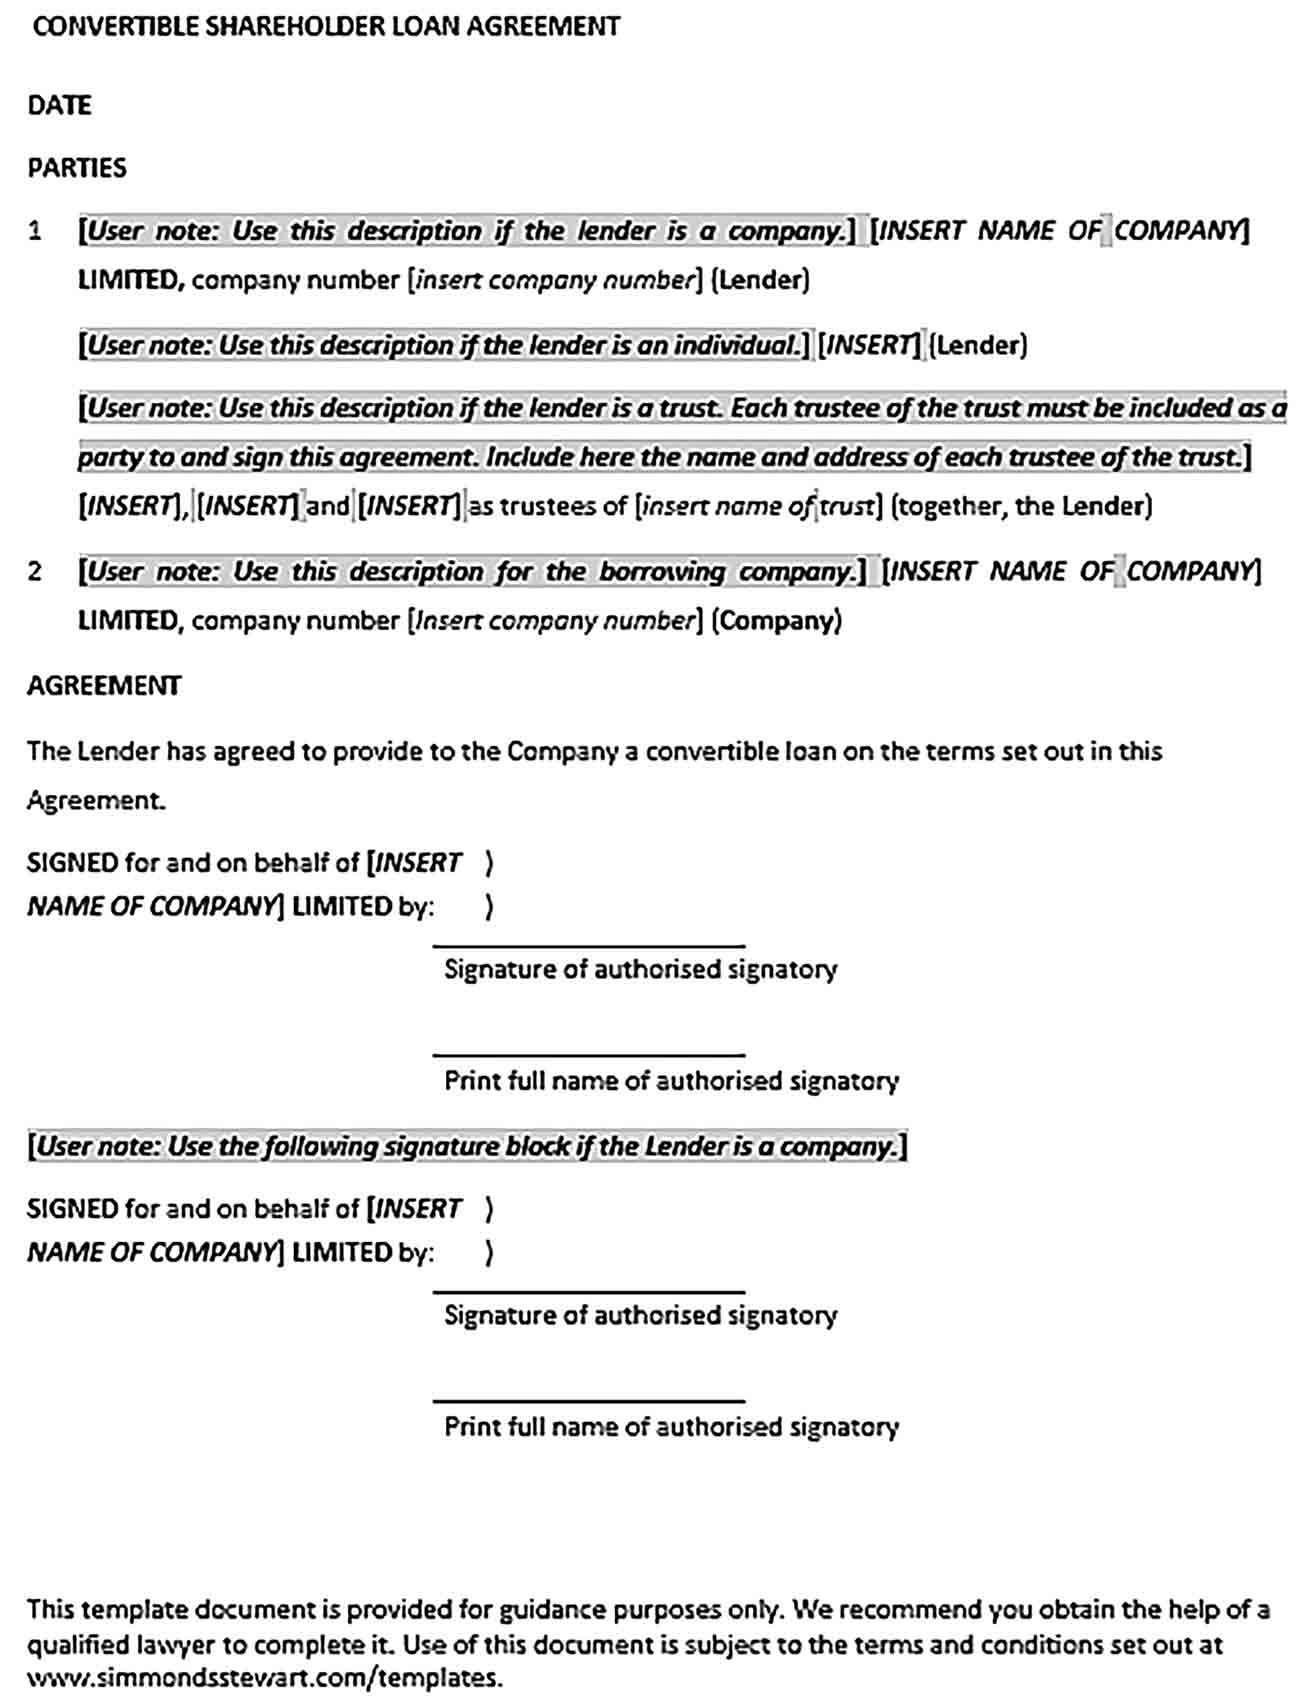 Sample Convertible Loan Agreement 002